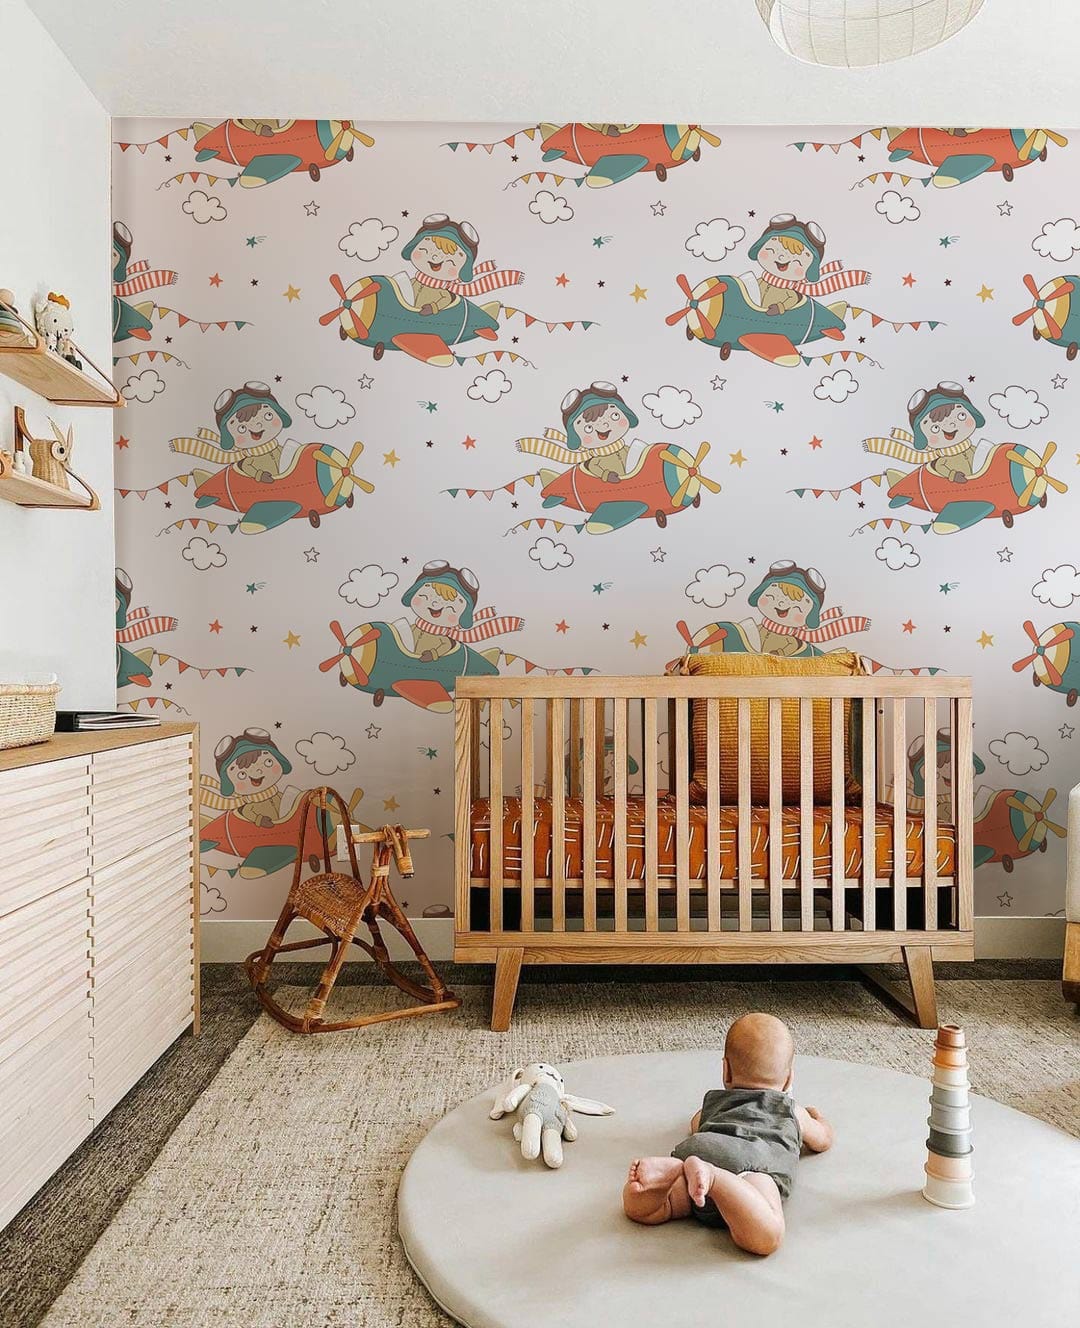 Colorful Cartoon Wallpaper For Nursery Interior Decor